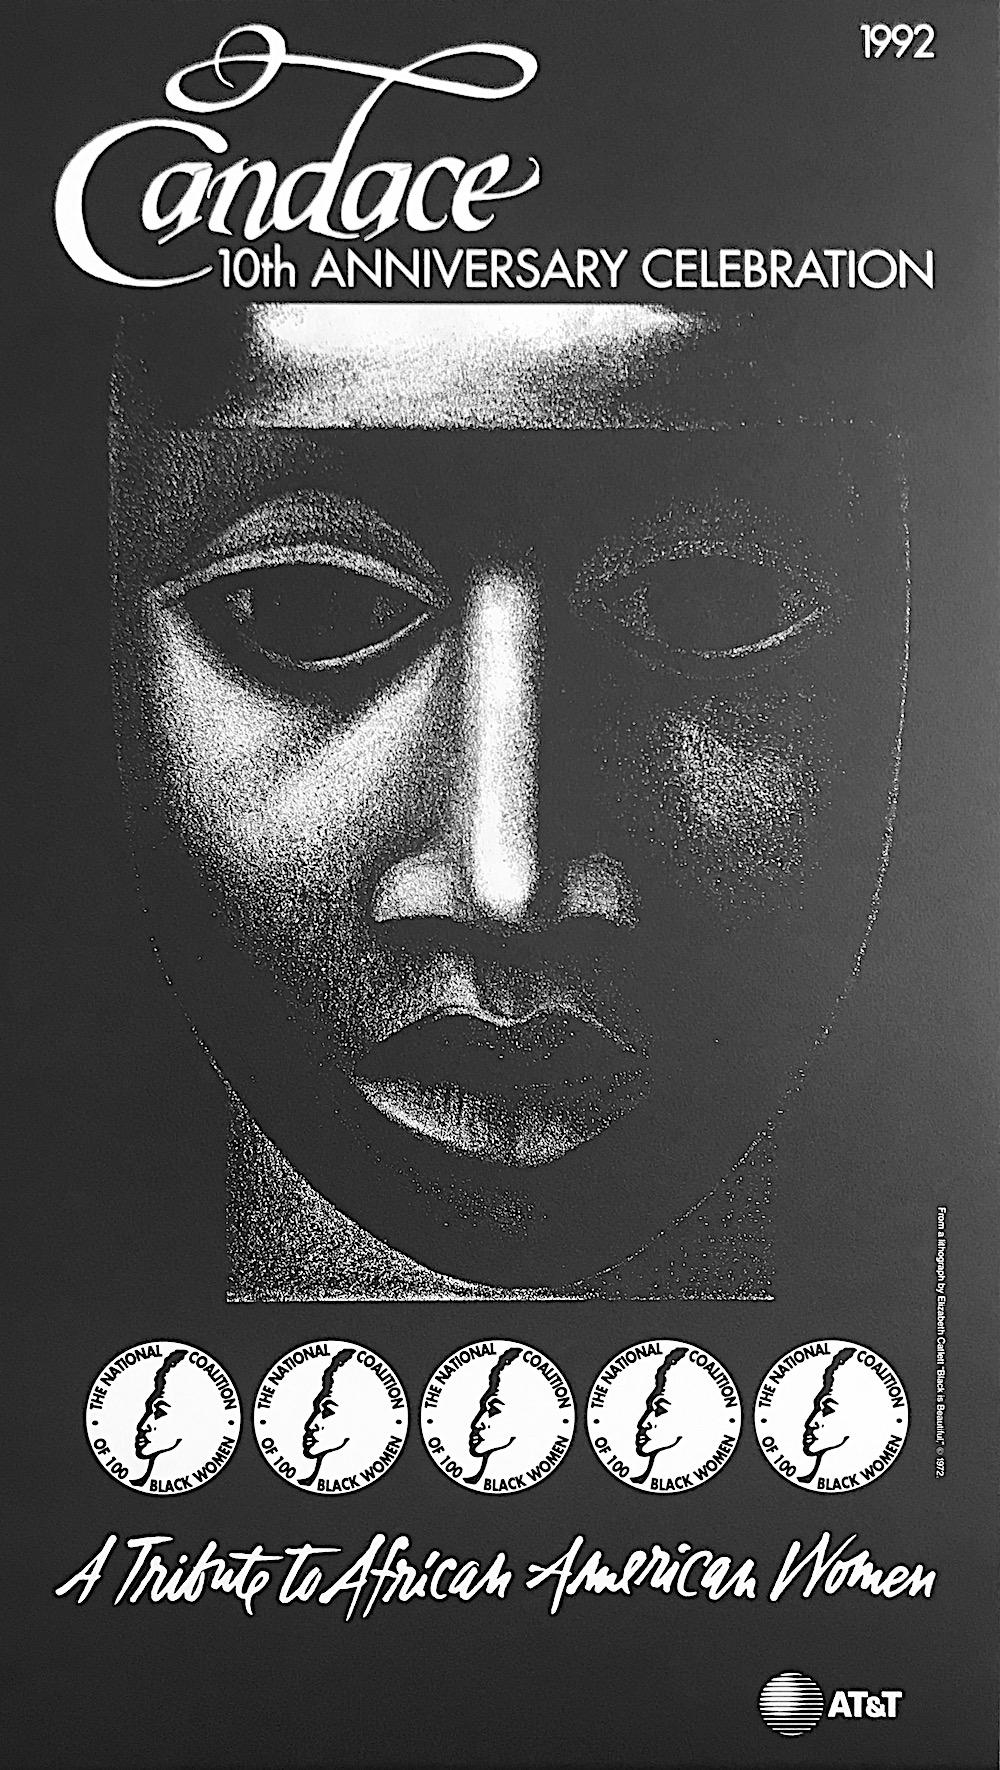 CANDACE 1992 Hommage an afroamerikanische Frauen, Porträt einer schwarzen Frau 